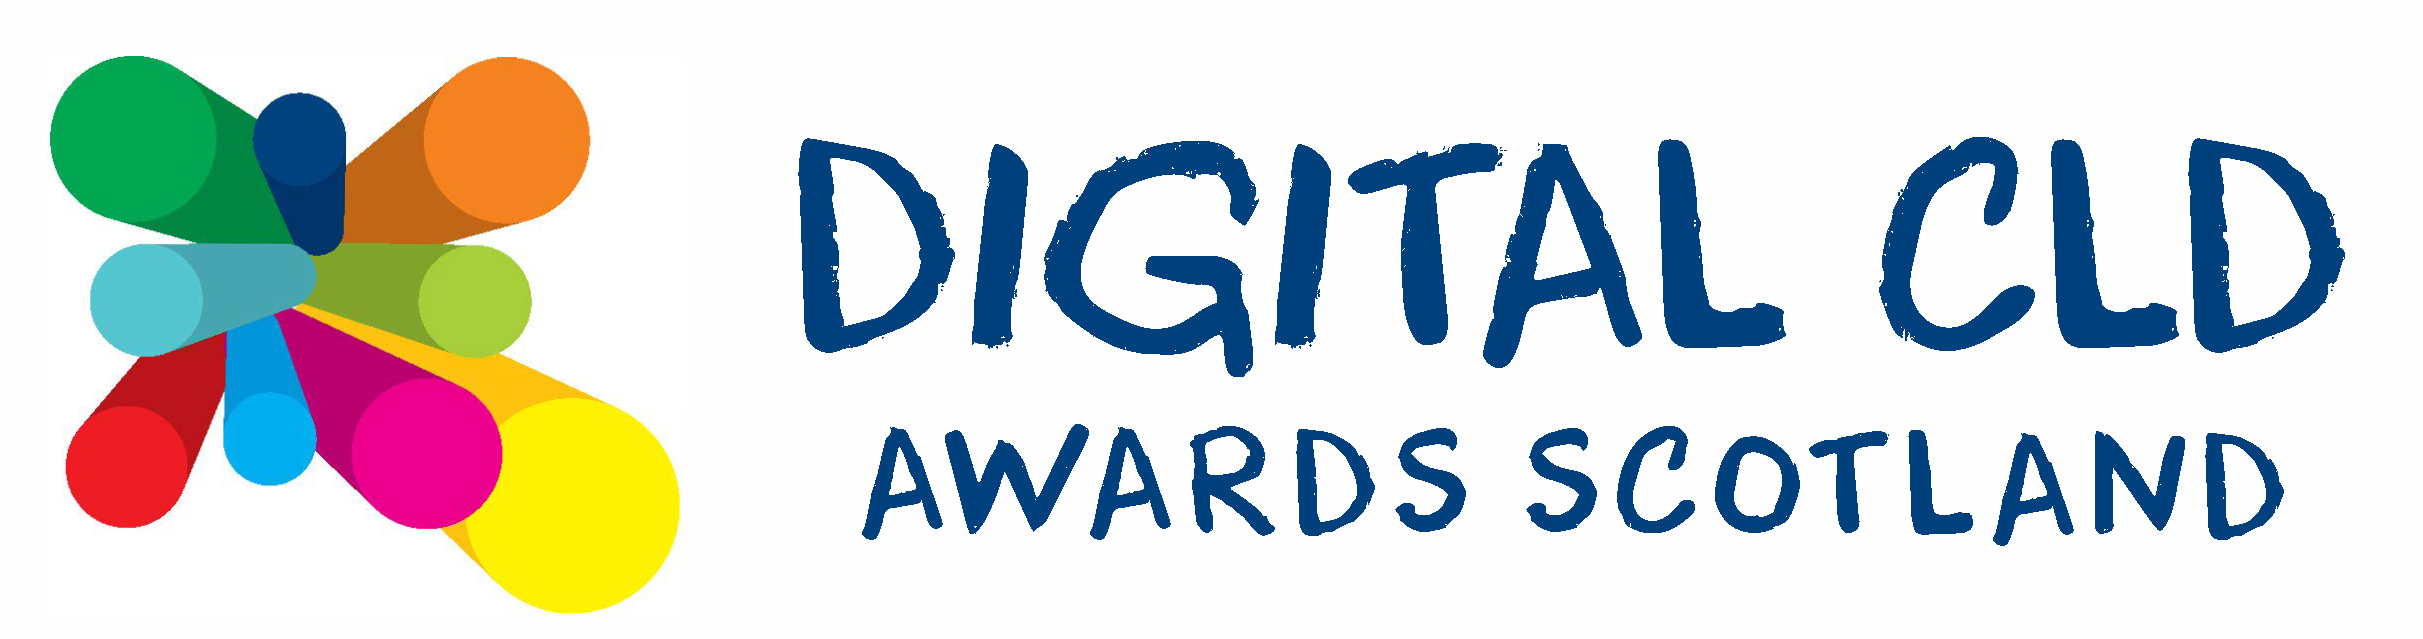 Digital CLD Awards